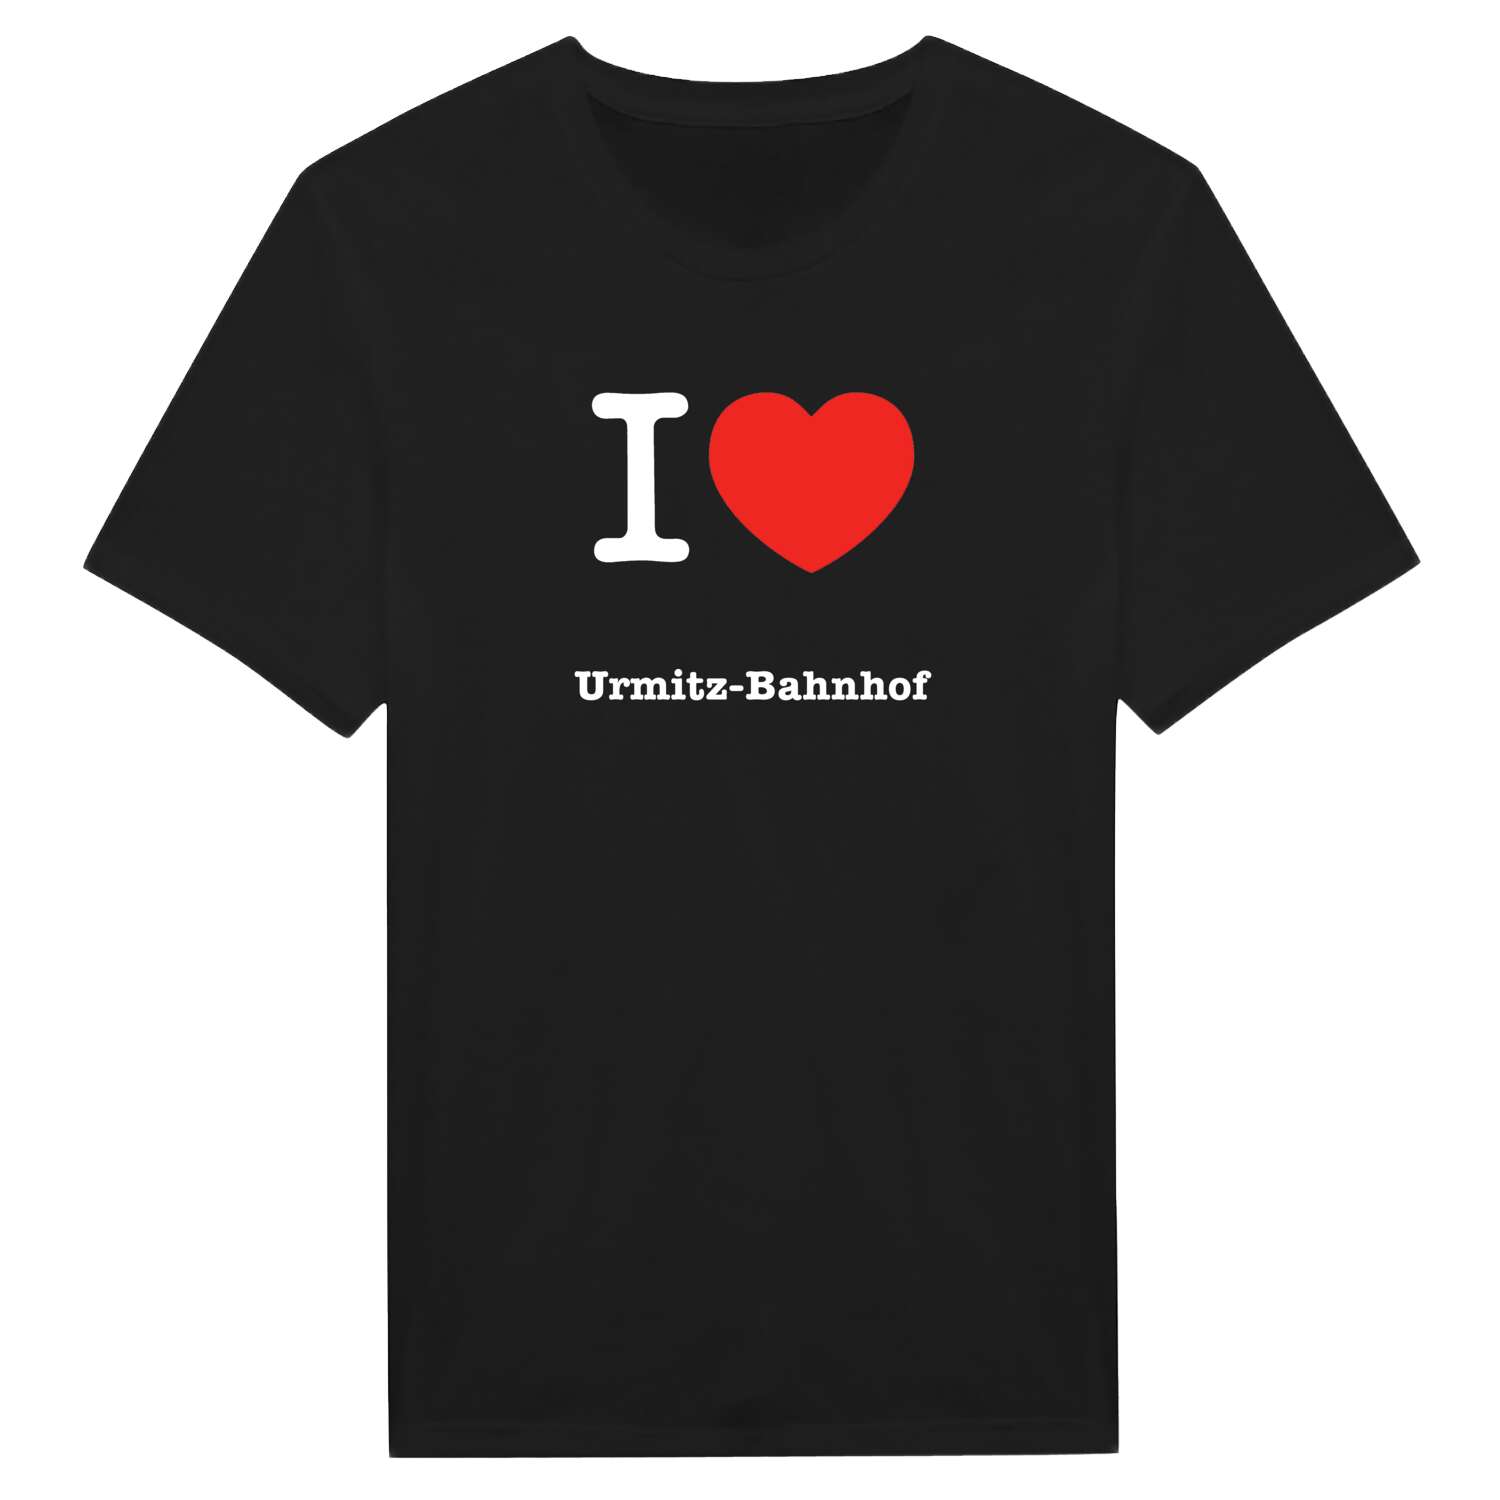 Urmitz-Bahnhof T-Shirt »I love«